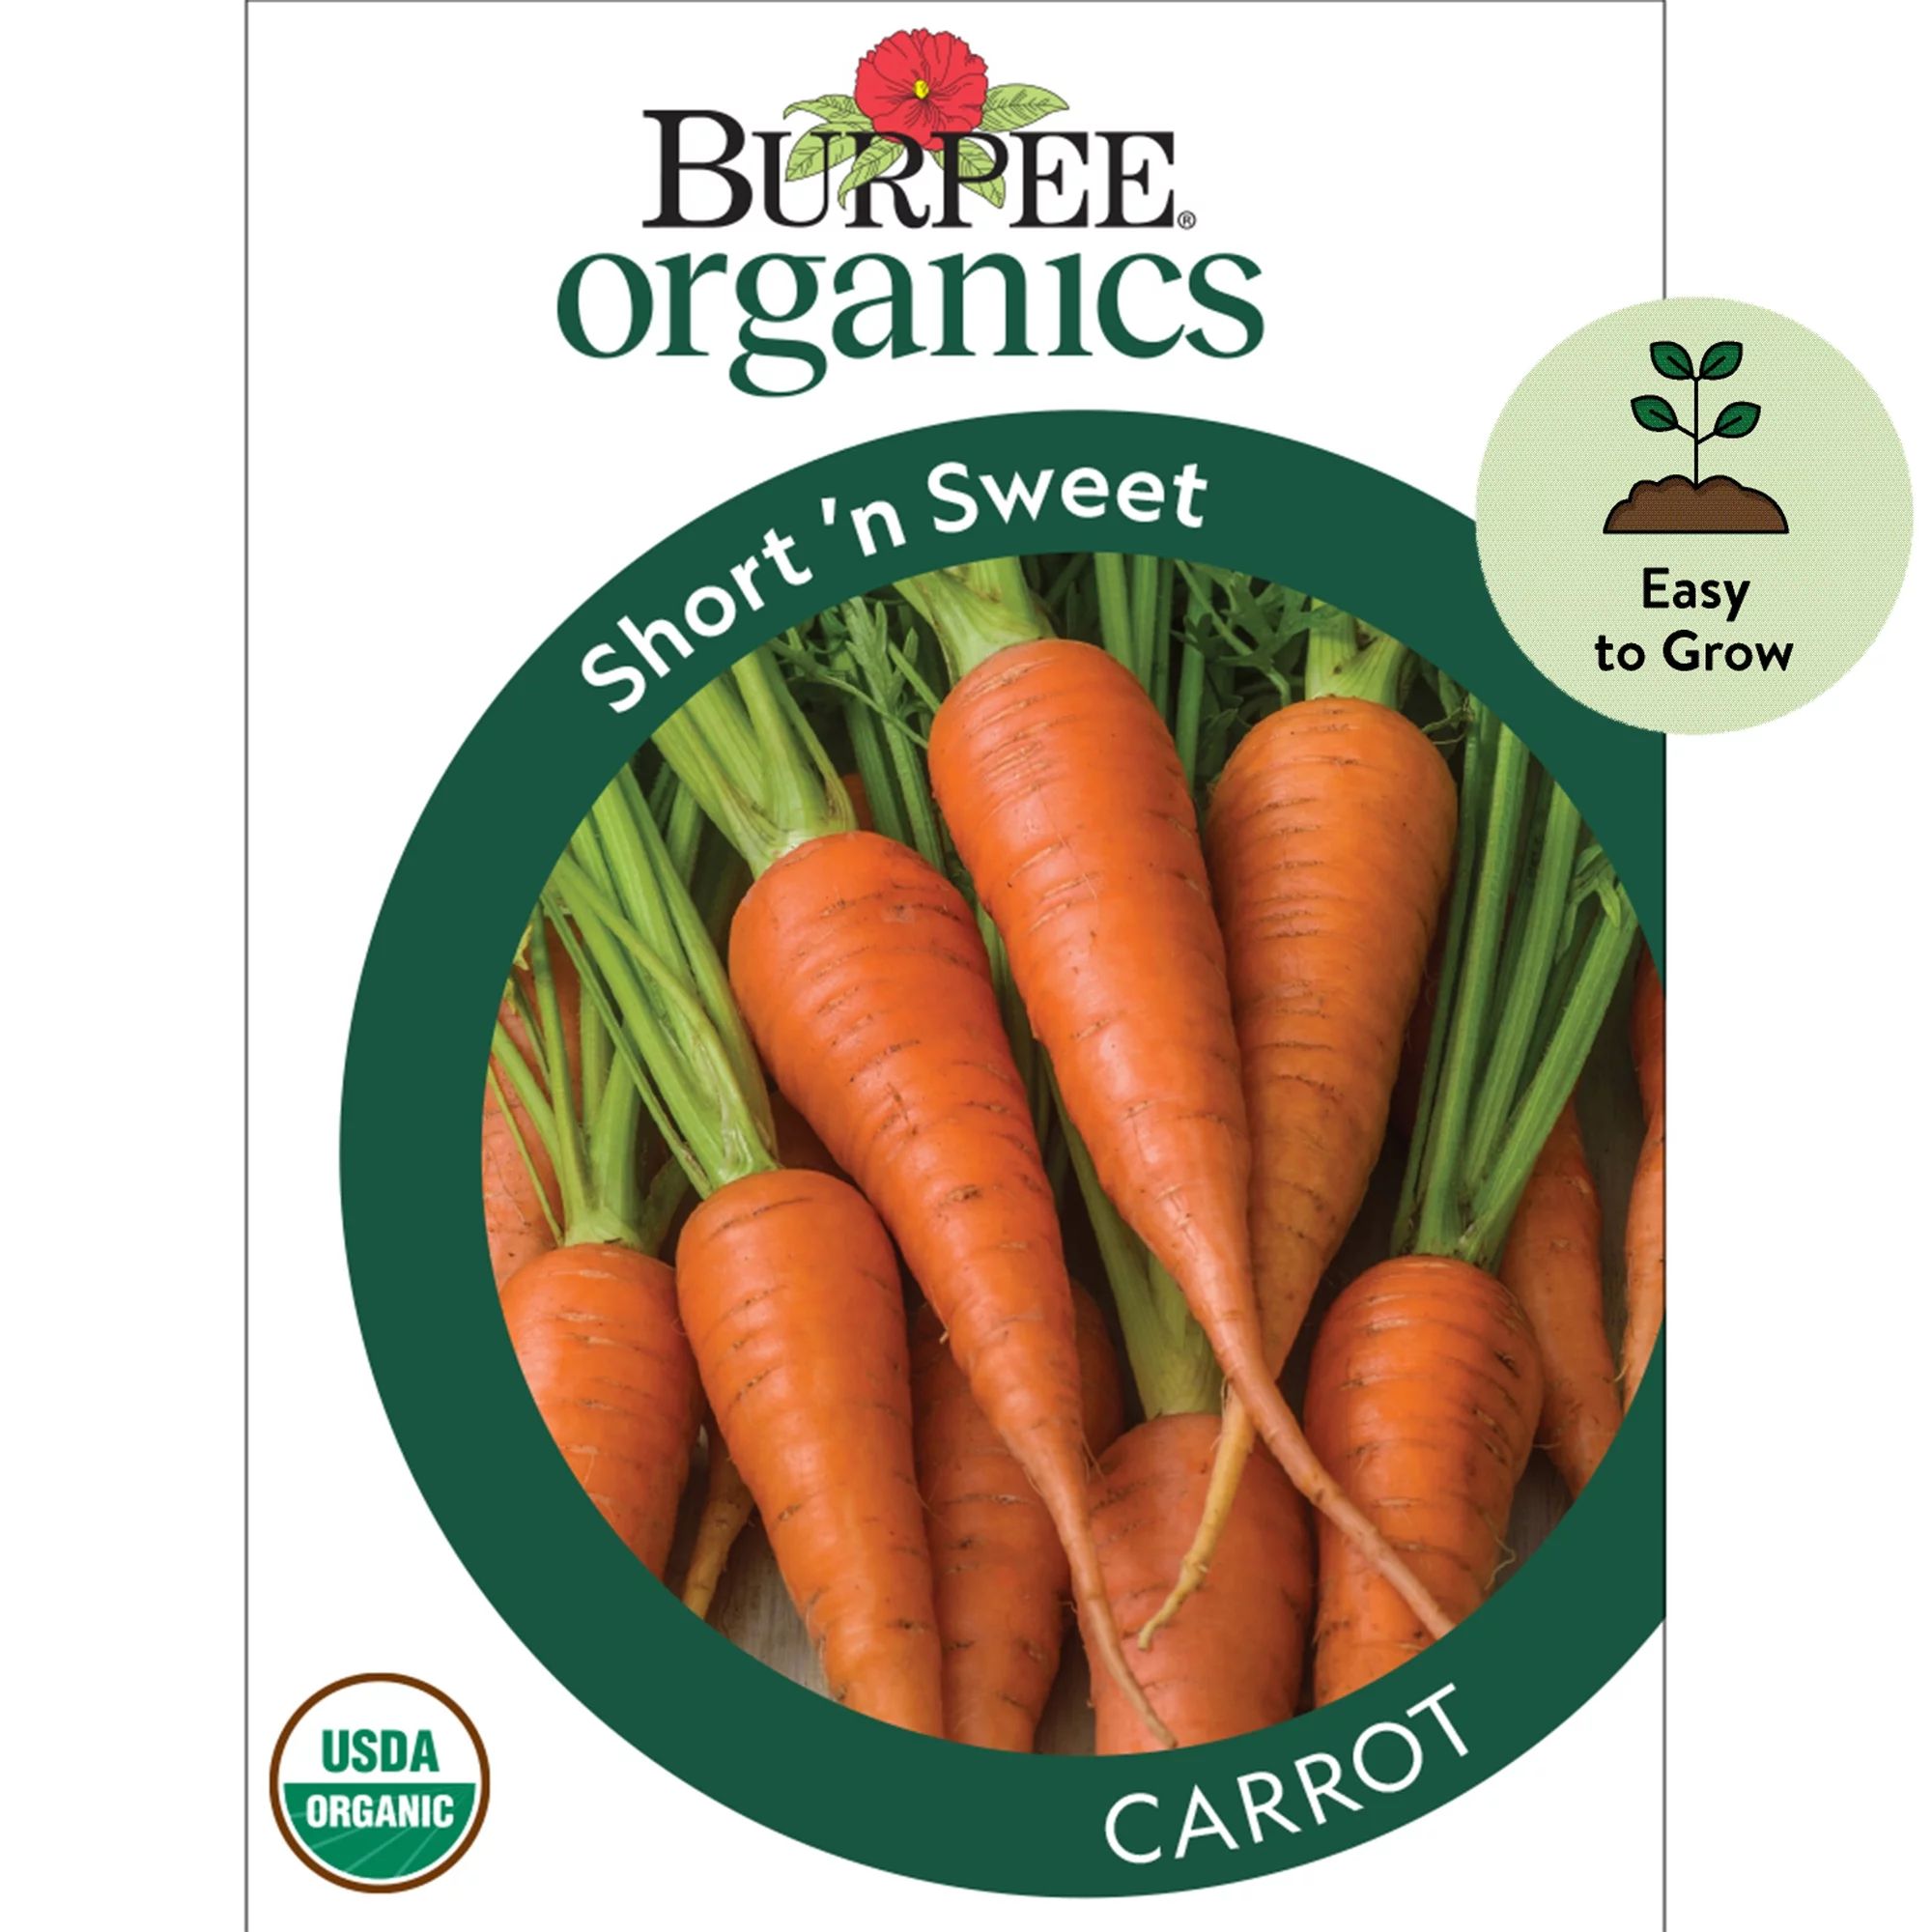 Burpee Organic Short 'n Sweet Carrot Seeds - Non-GMO, Easy to Grow, Organic Vegetable Gardening S... | Walmart (US)